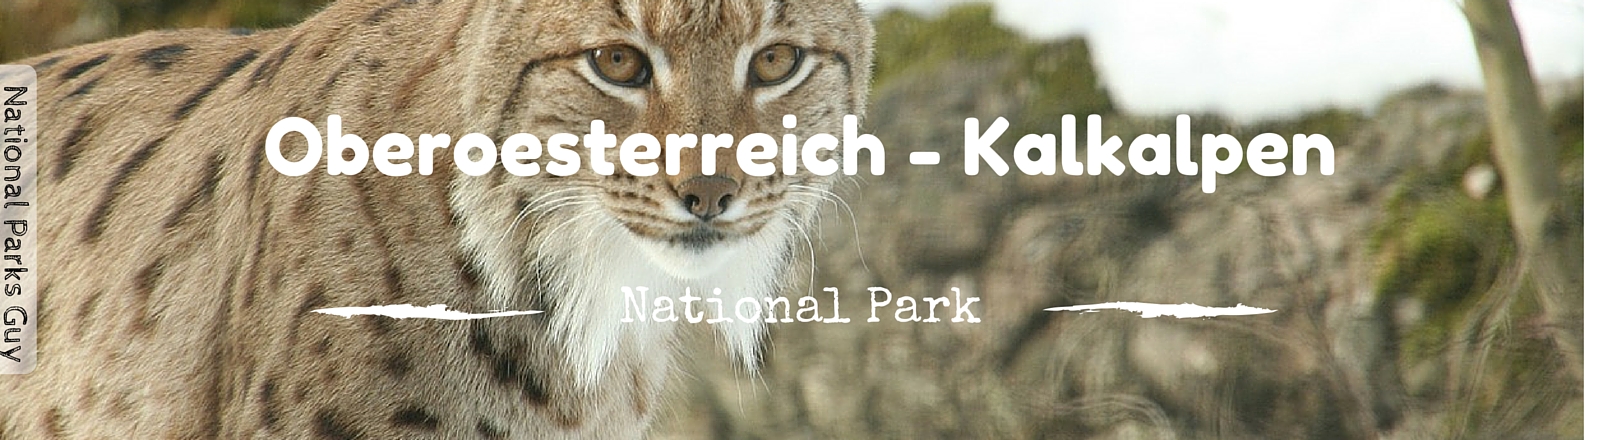 Oberoesterreich-Kalkalpen National Park, Austria, National Parks Guy